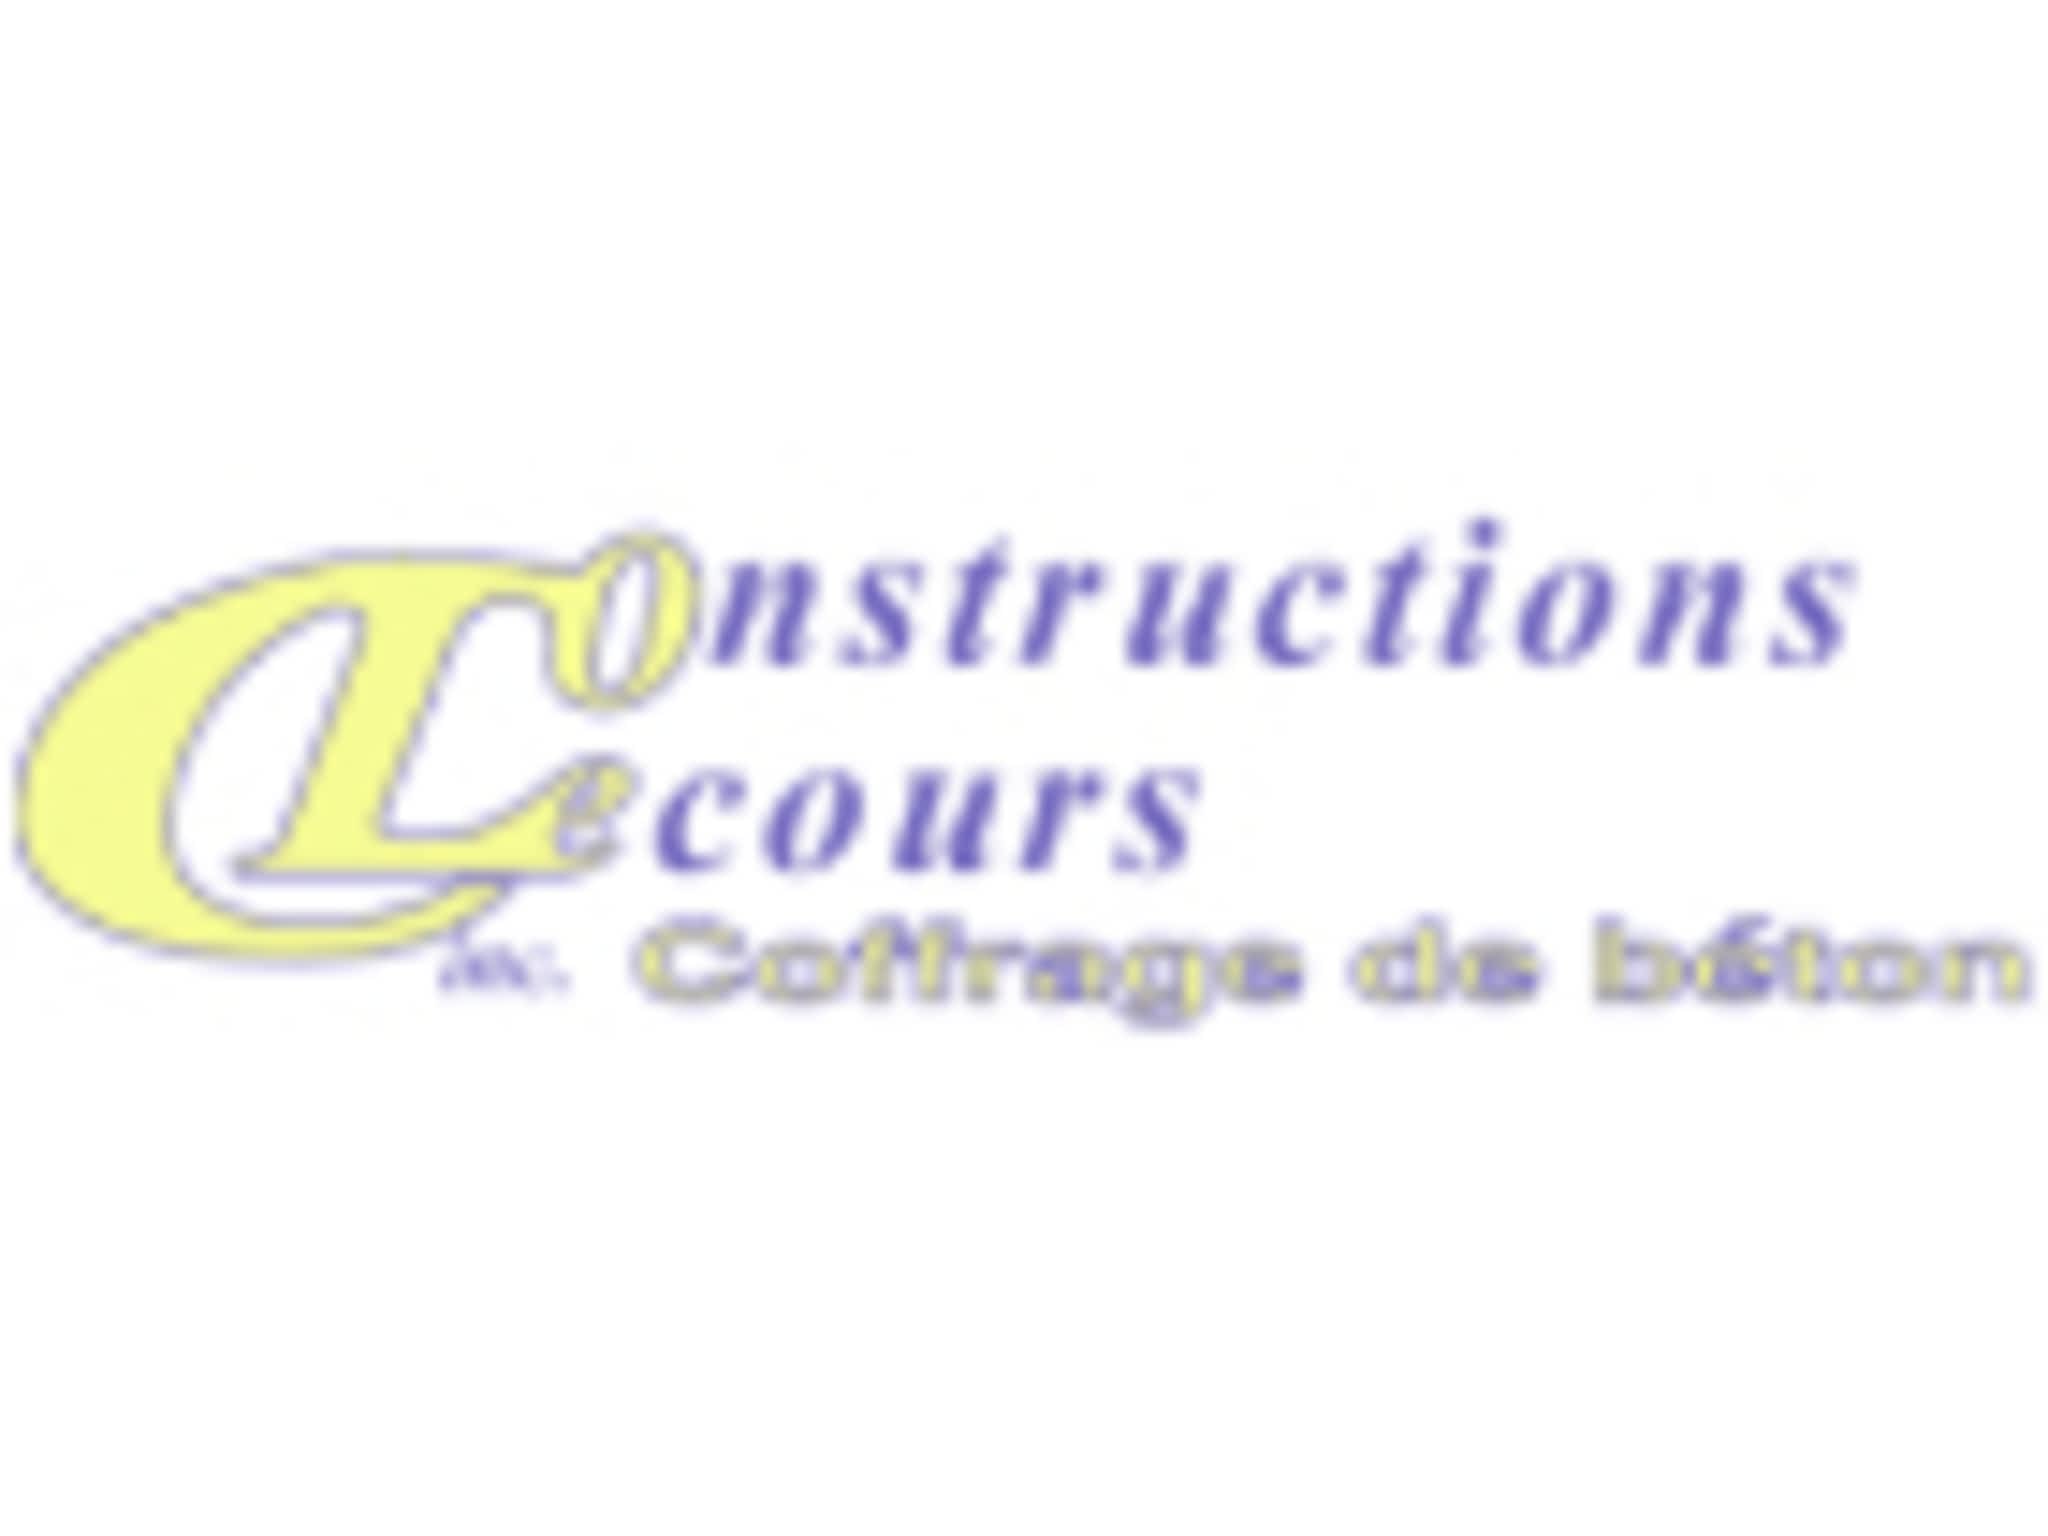 photo Constructions Lecours Inc